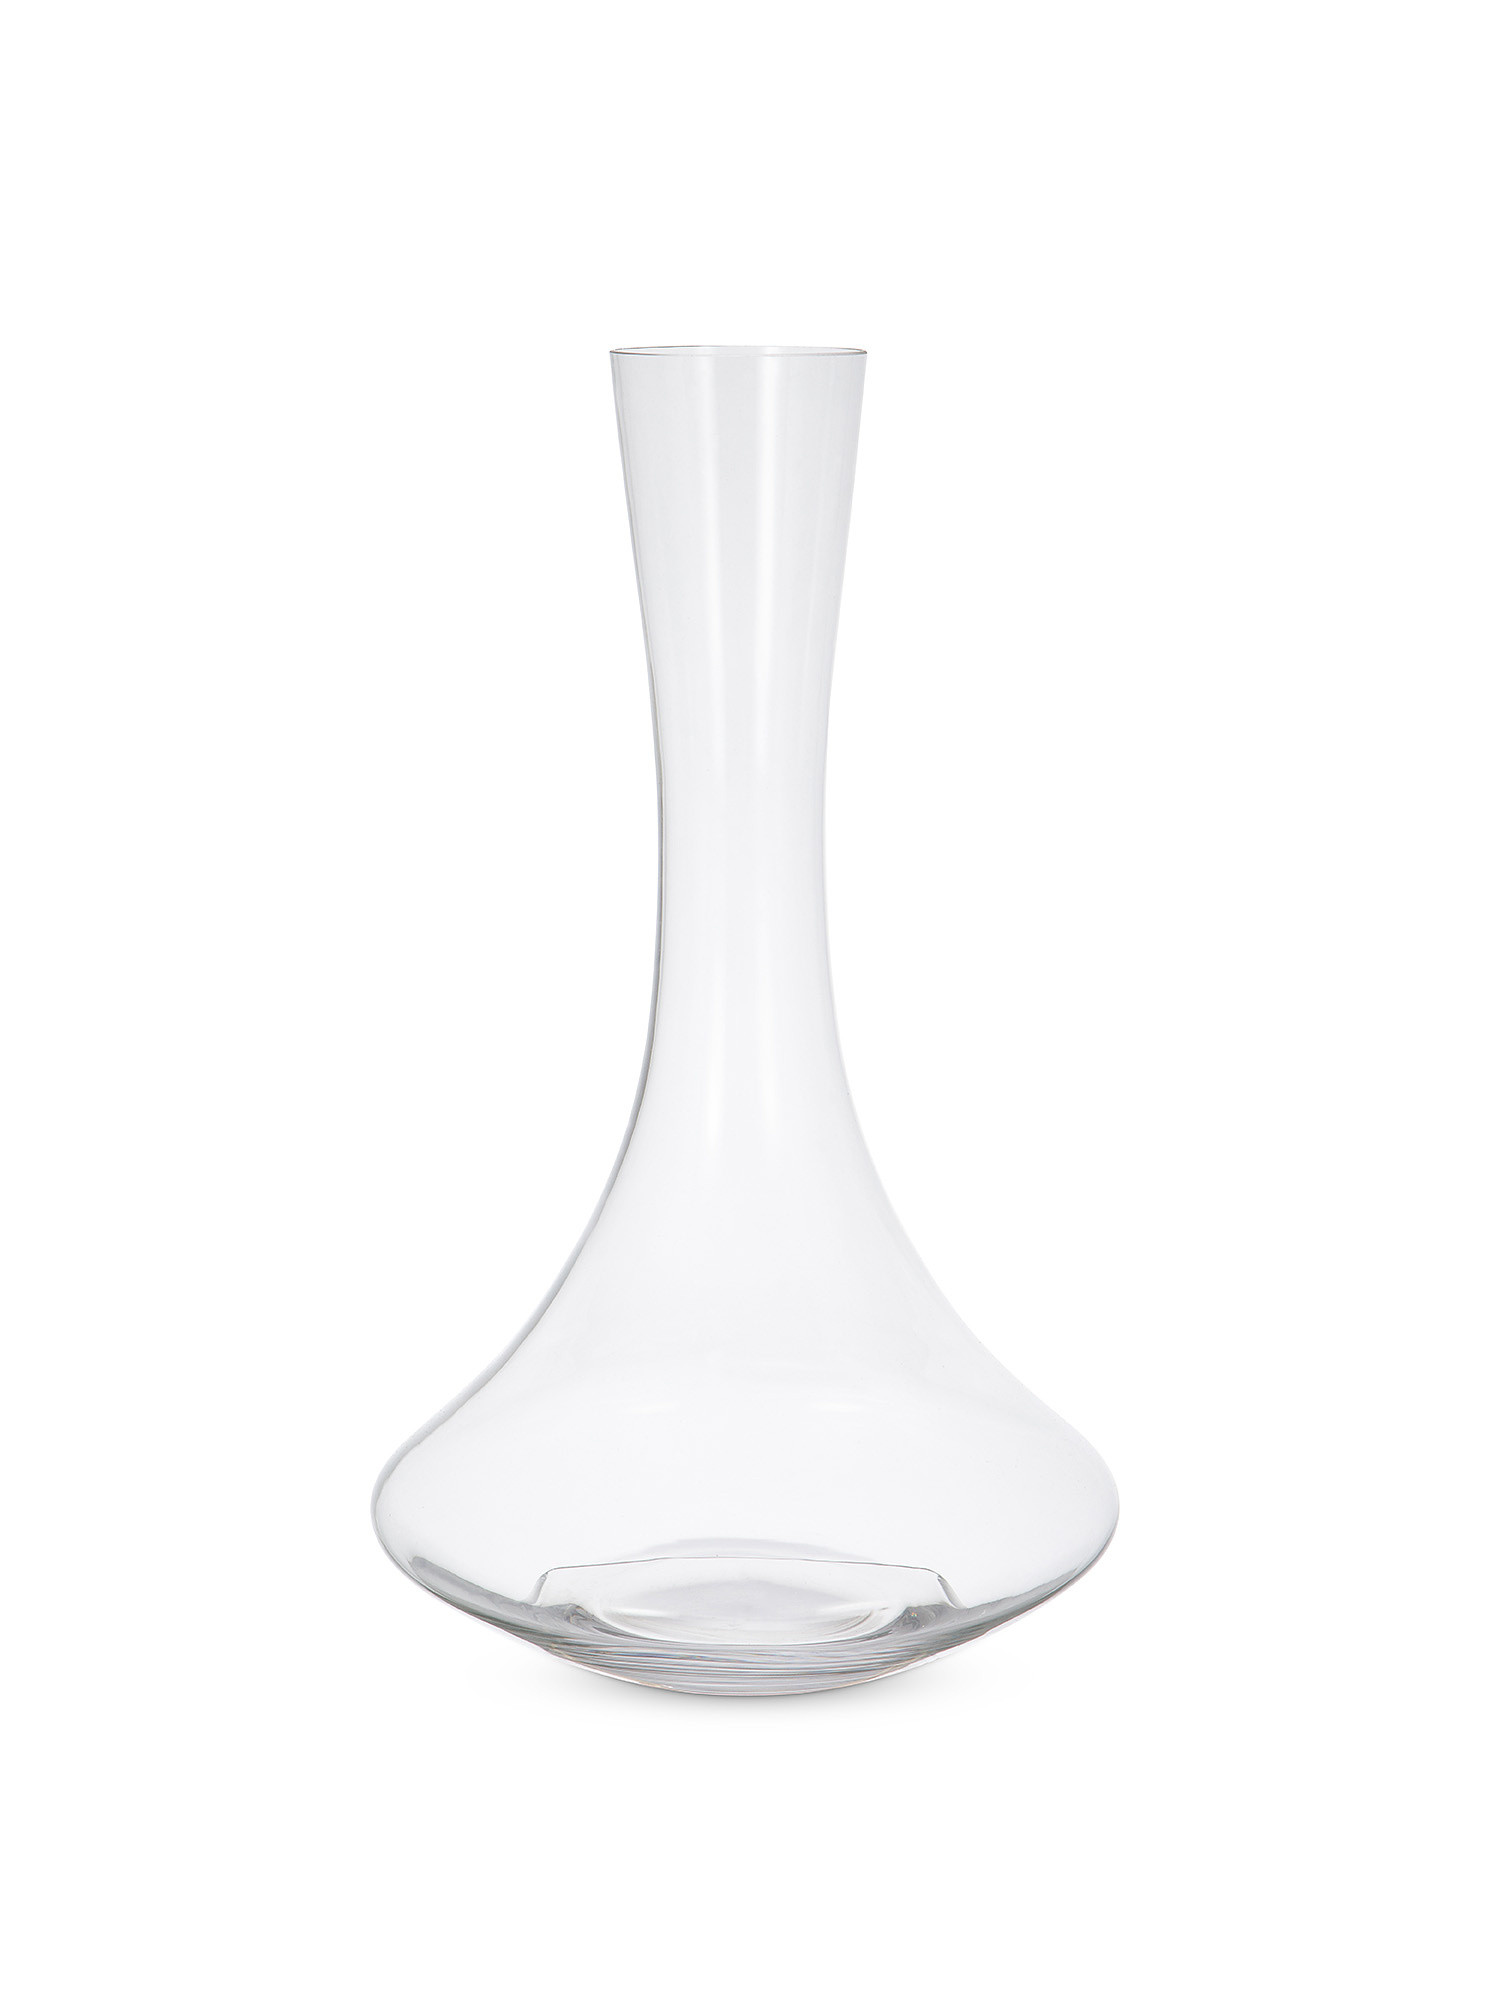 Bohemia glass decanter, Transparent, large image number 0